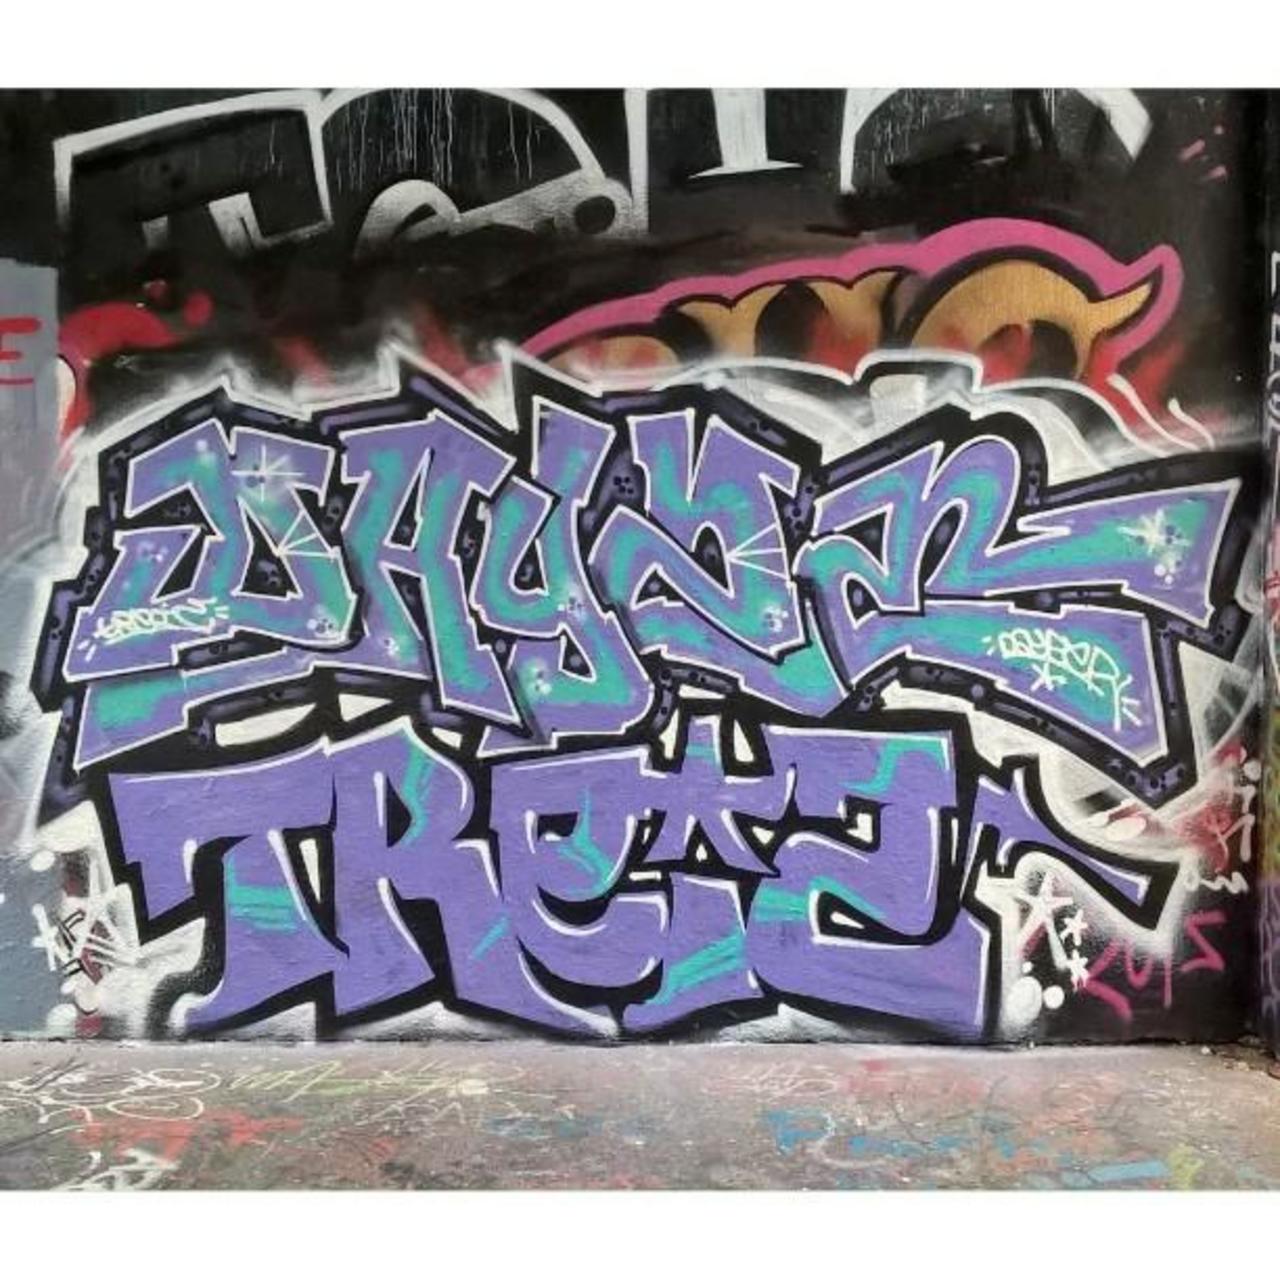 DAYZE 
#TREIZ #streetart #graffiti #graff #art #fatcap #bombing #sprayart #spraycanart #wallart #handstyle #letteri… http://t.co/zd1e0paZ5U